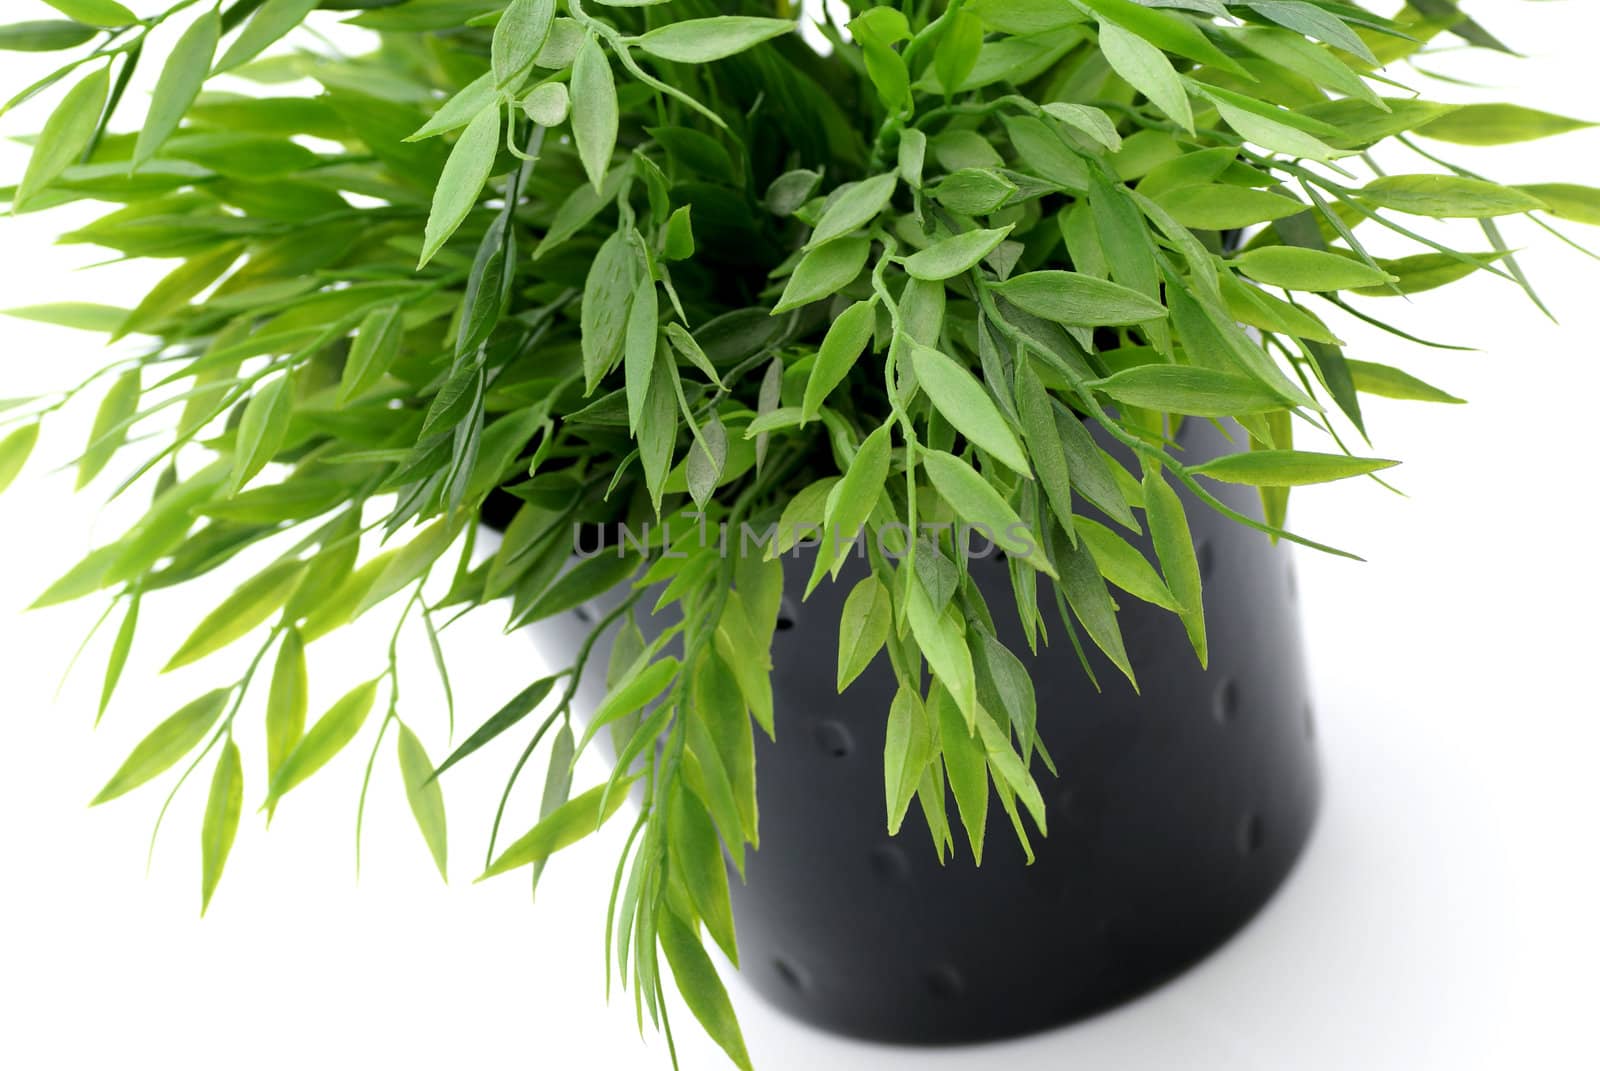 A green plant in black pot.